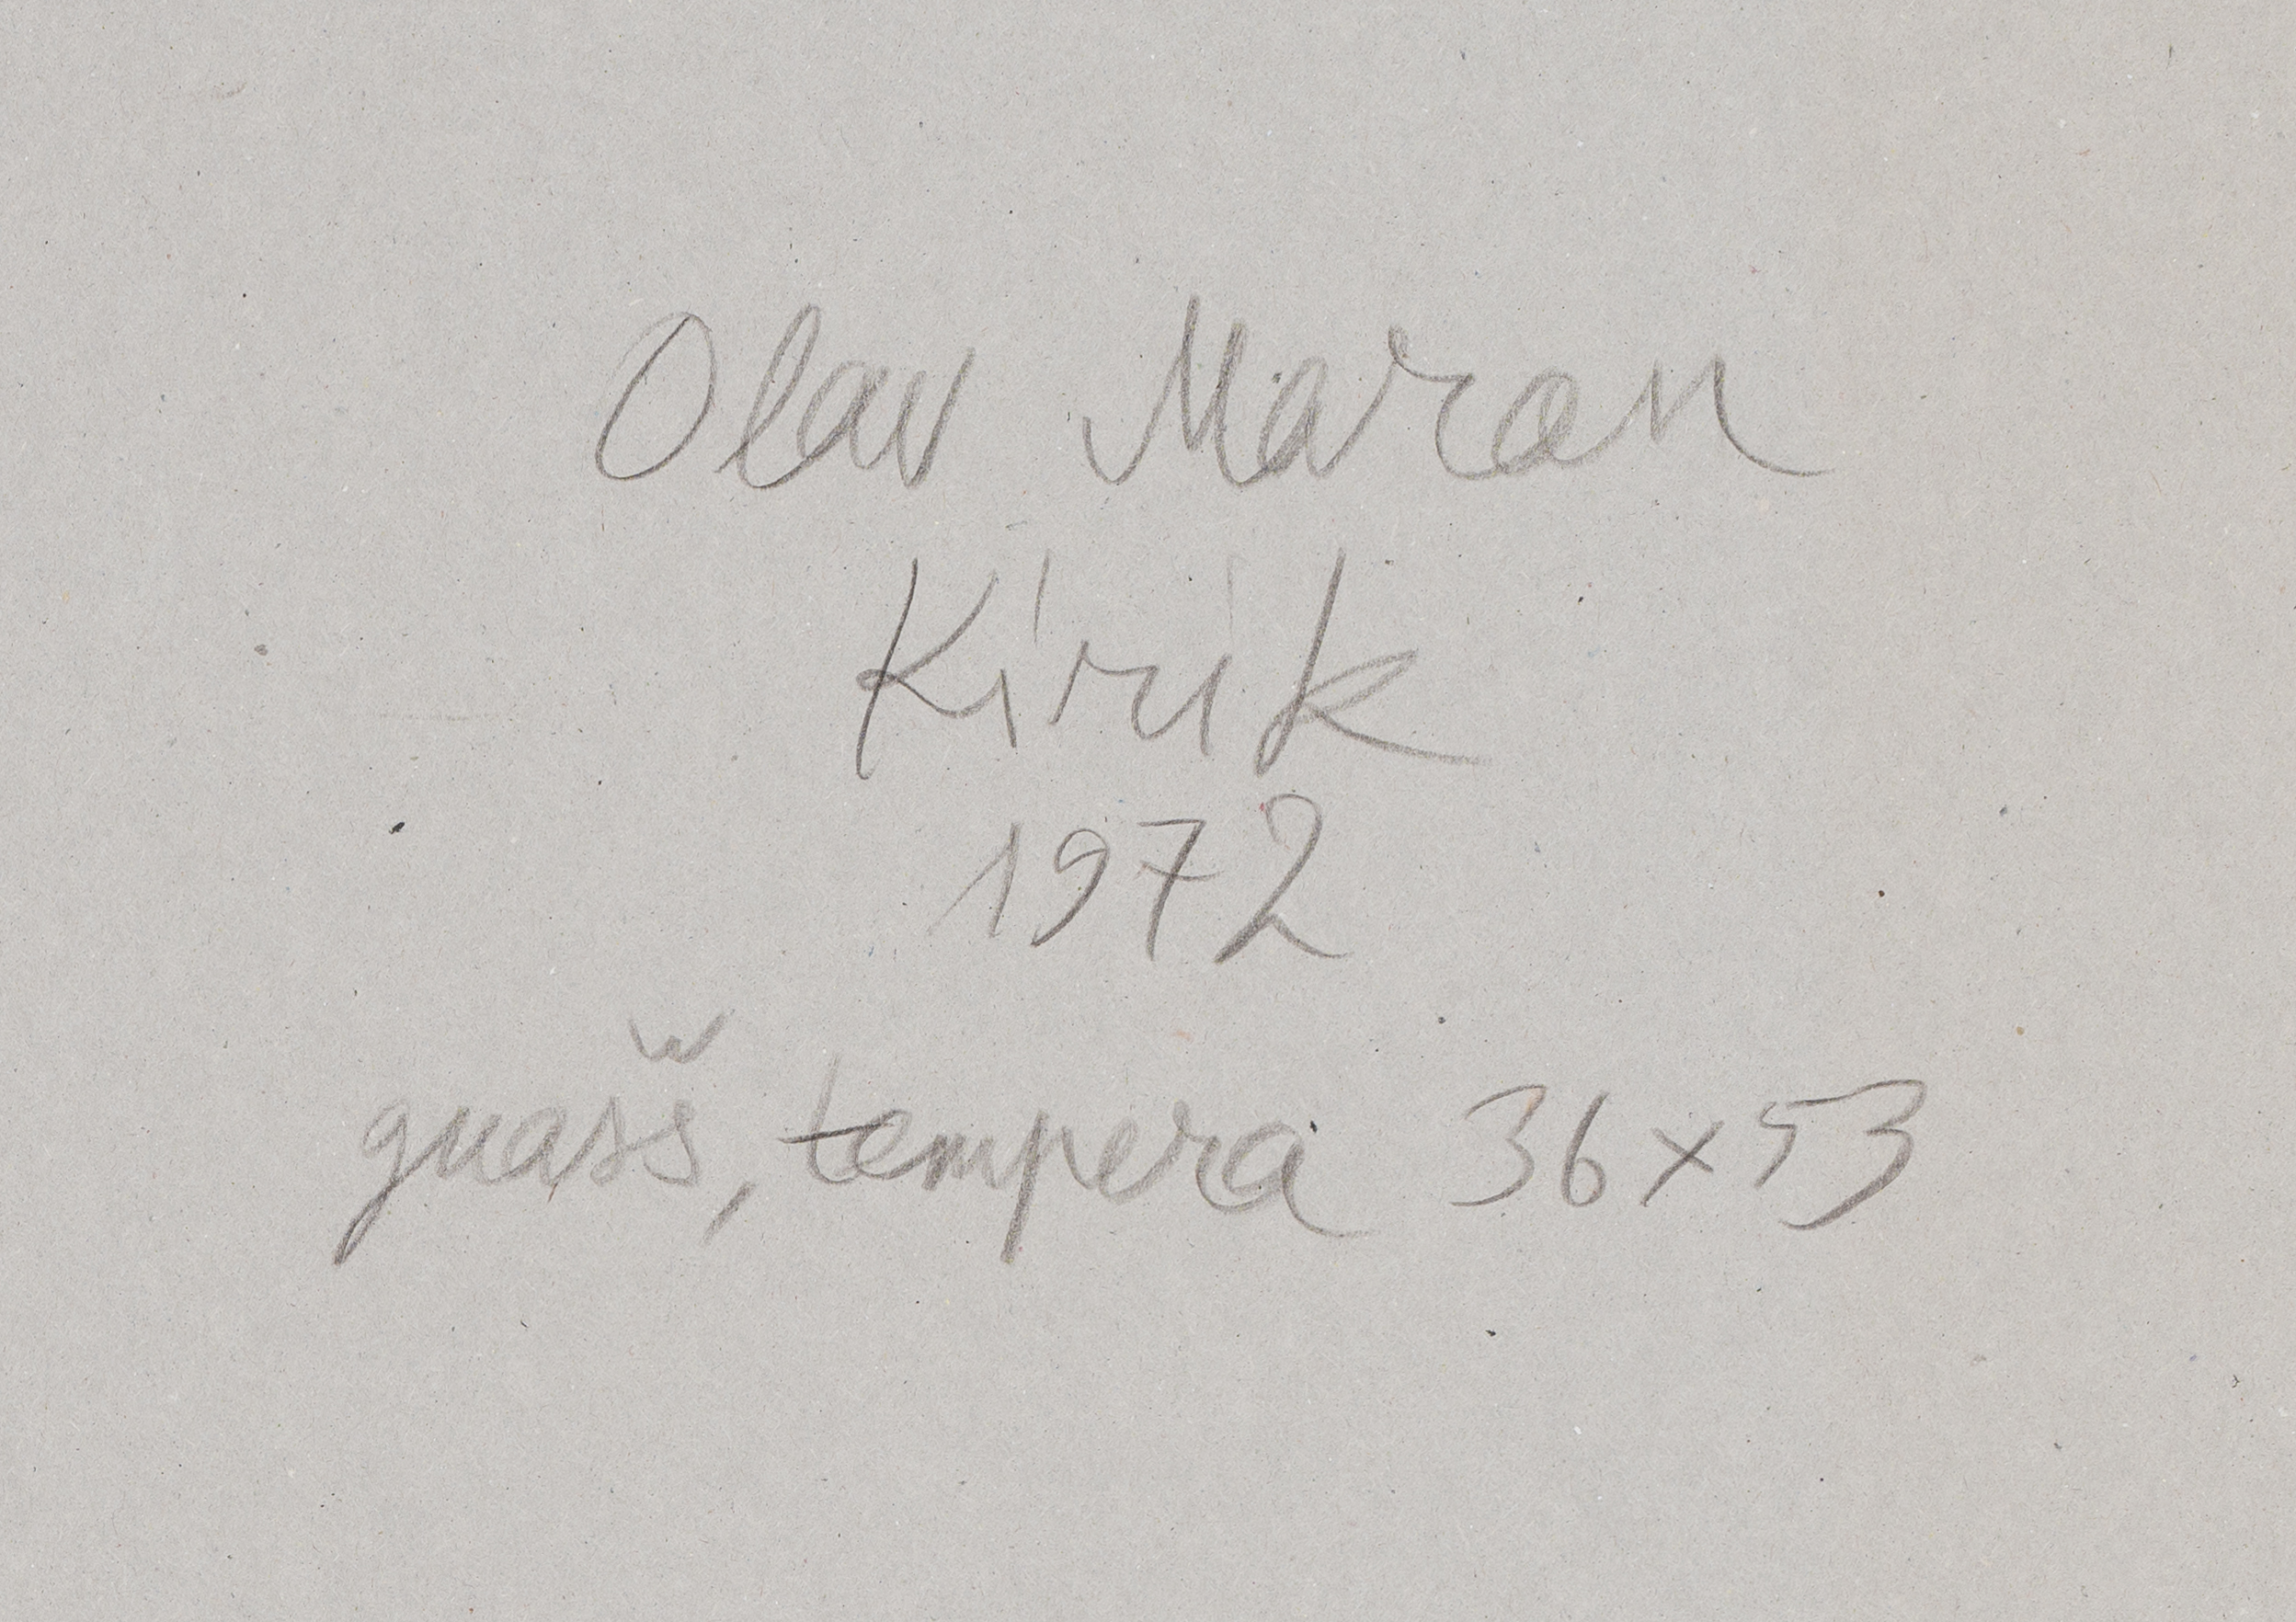 Olav Maran “Kirik”, 1972. 36 x 53 cm.